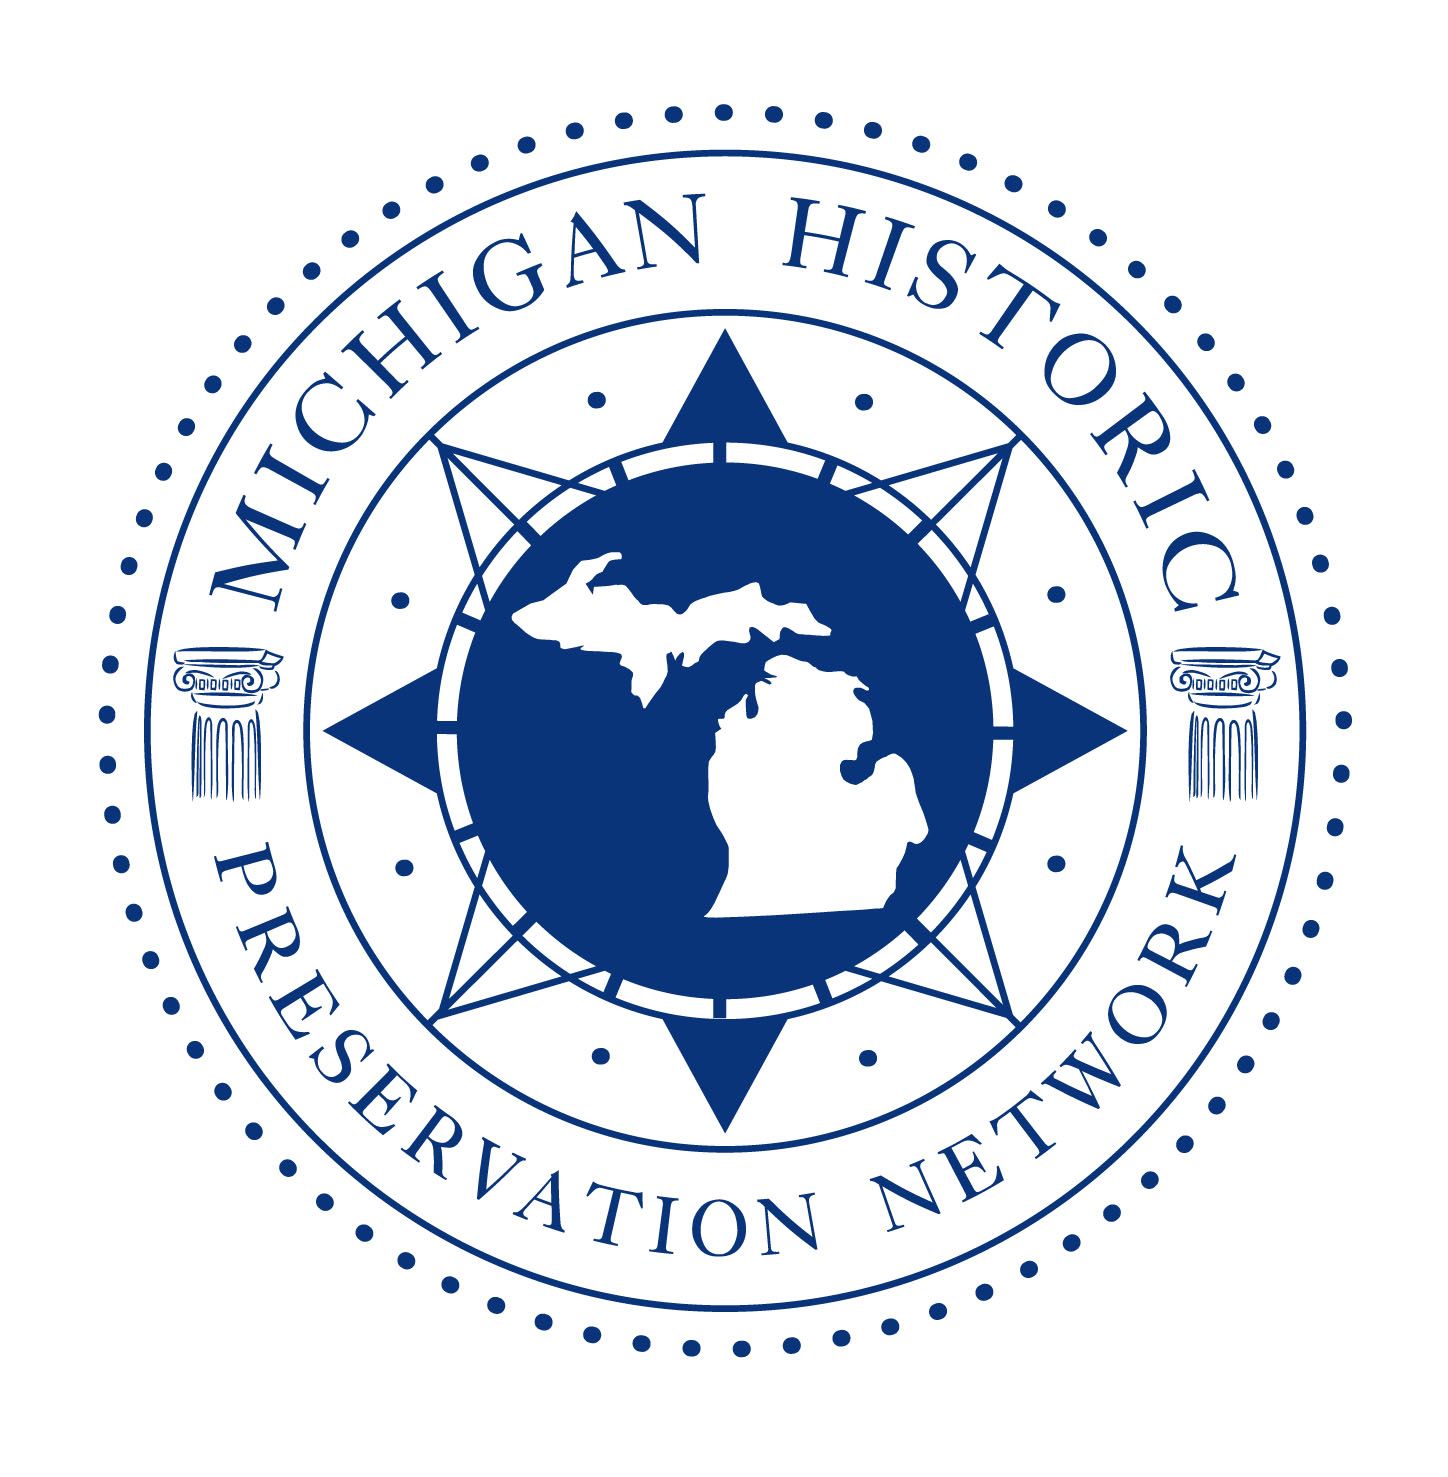 Michigan Historic Preservation Network